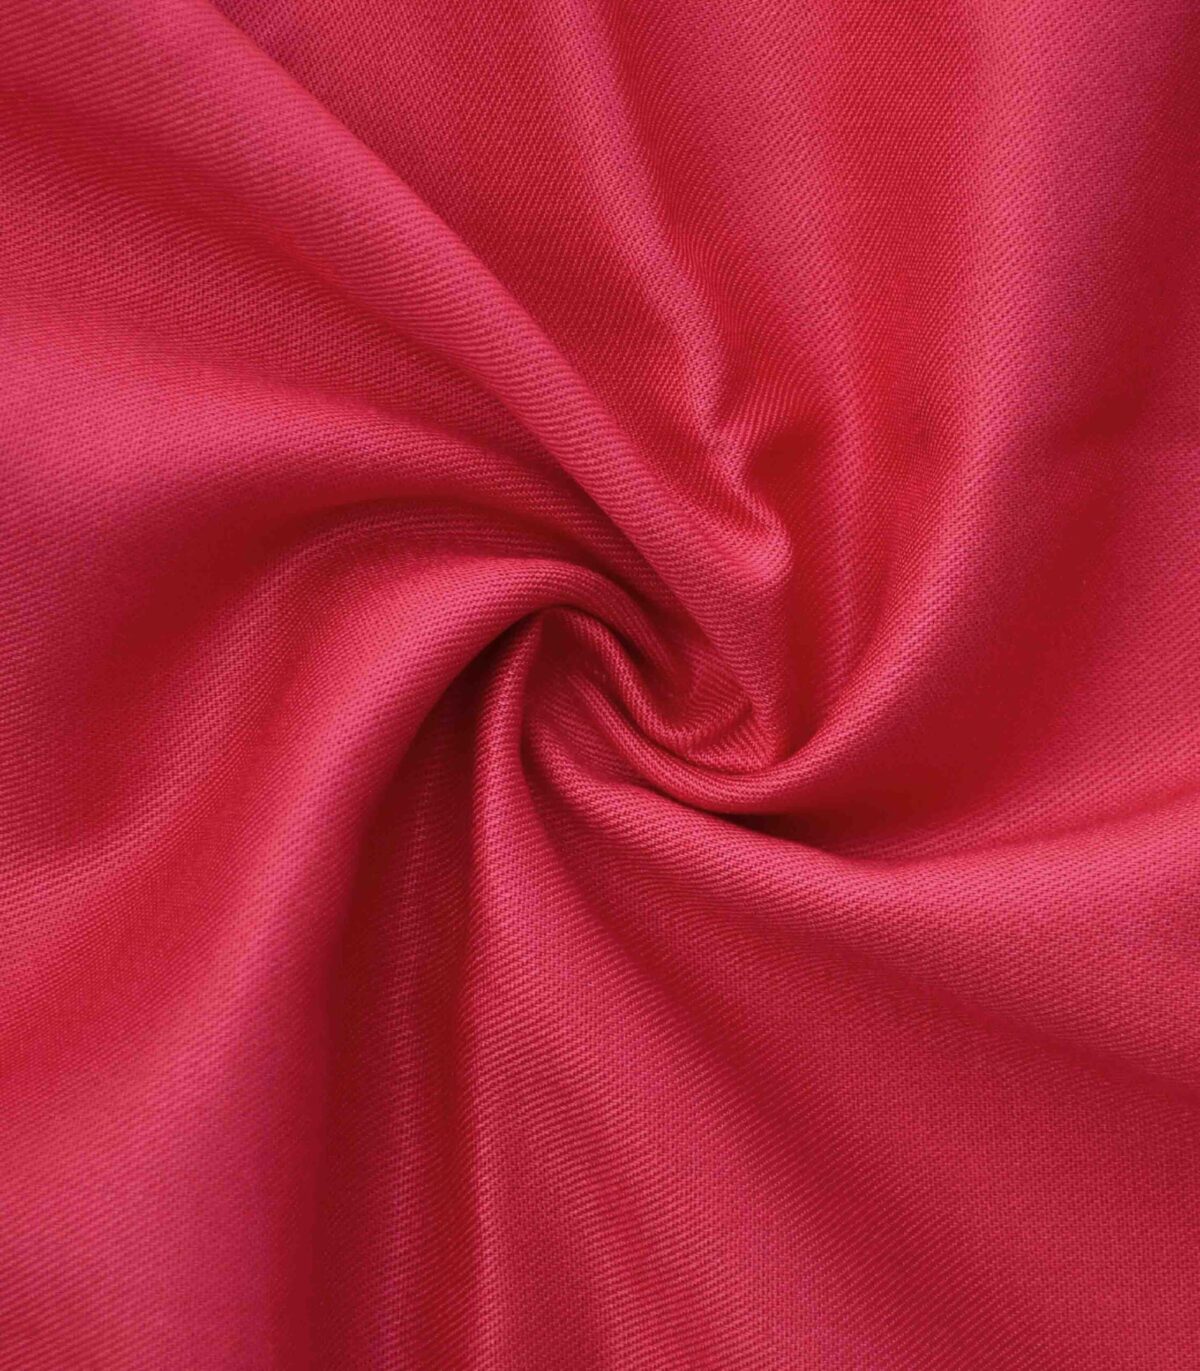 Rayon Dark Rose Solid Fabric